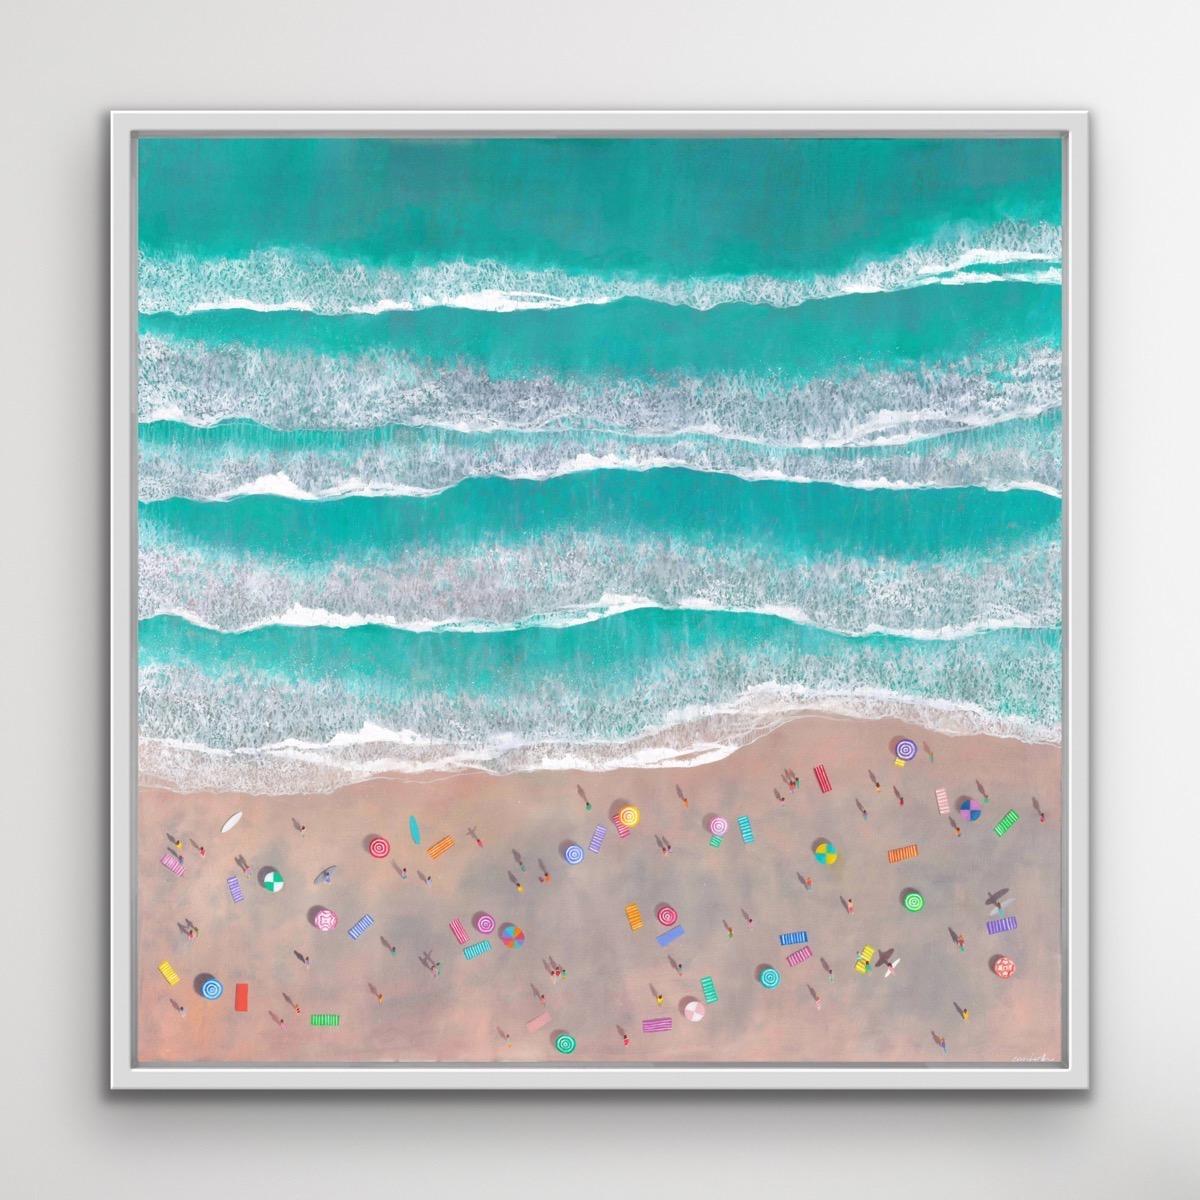 Weekend Beach Day by Lenny Cornforth [2022]
original

Oil paint on canvas

Image size: H:102 cm x W:102 cm

Complete Size of Unframed Work: H:102 cm x W:102 cm x D:4cm

Frame Size: H:107 cm x W:107 cm x D:5.5cm

Sold Framed

Please note that insitu